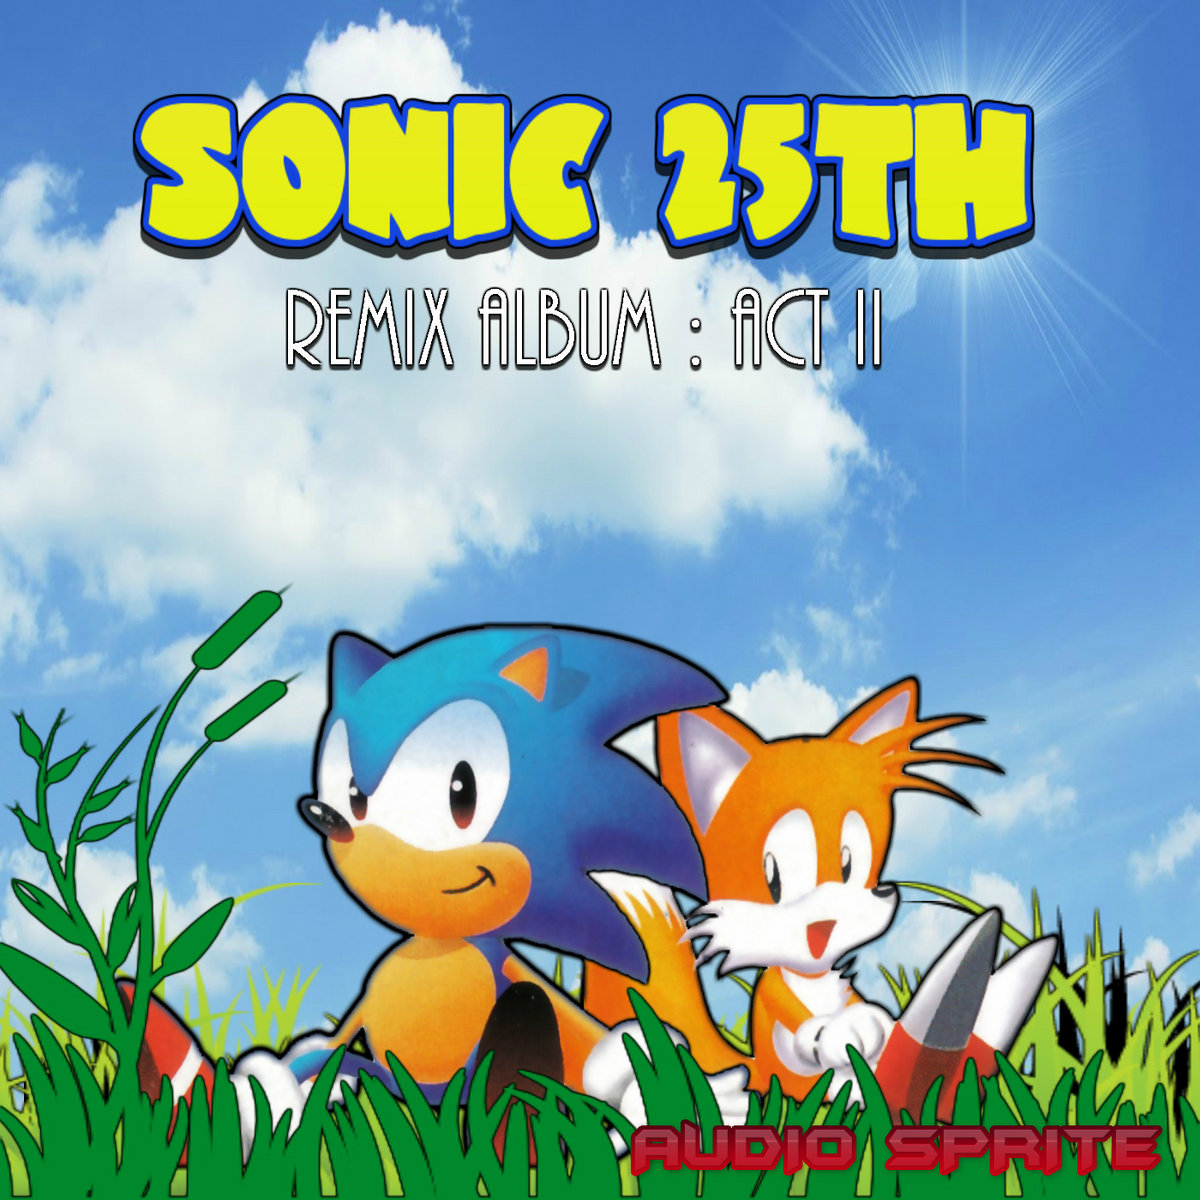 Sonic CD (USA) - Sonic Boom - Featuring Elsie Lovelock | Audio Sprite